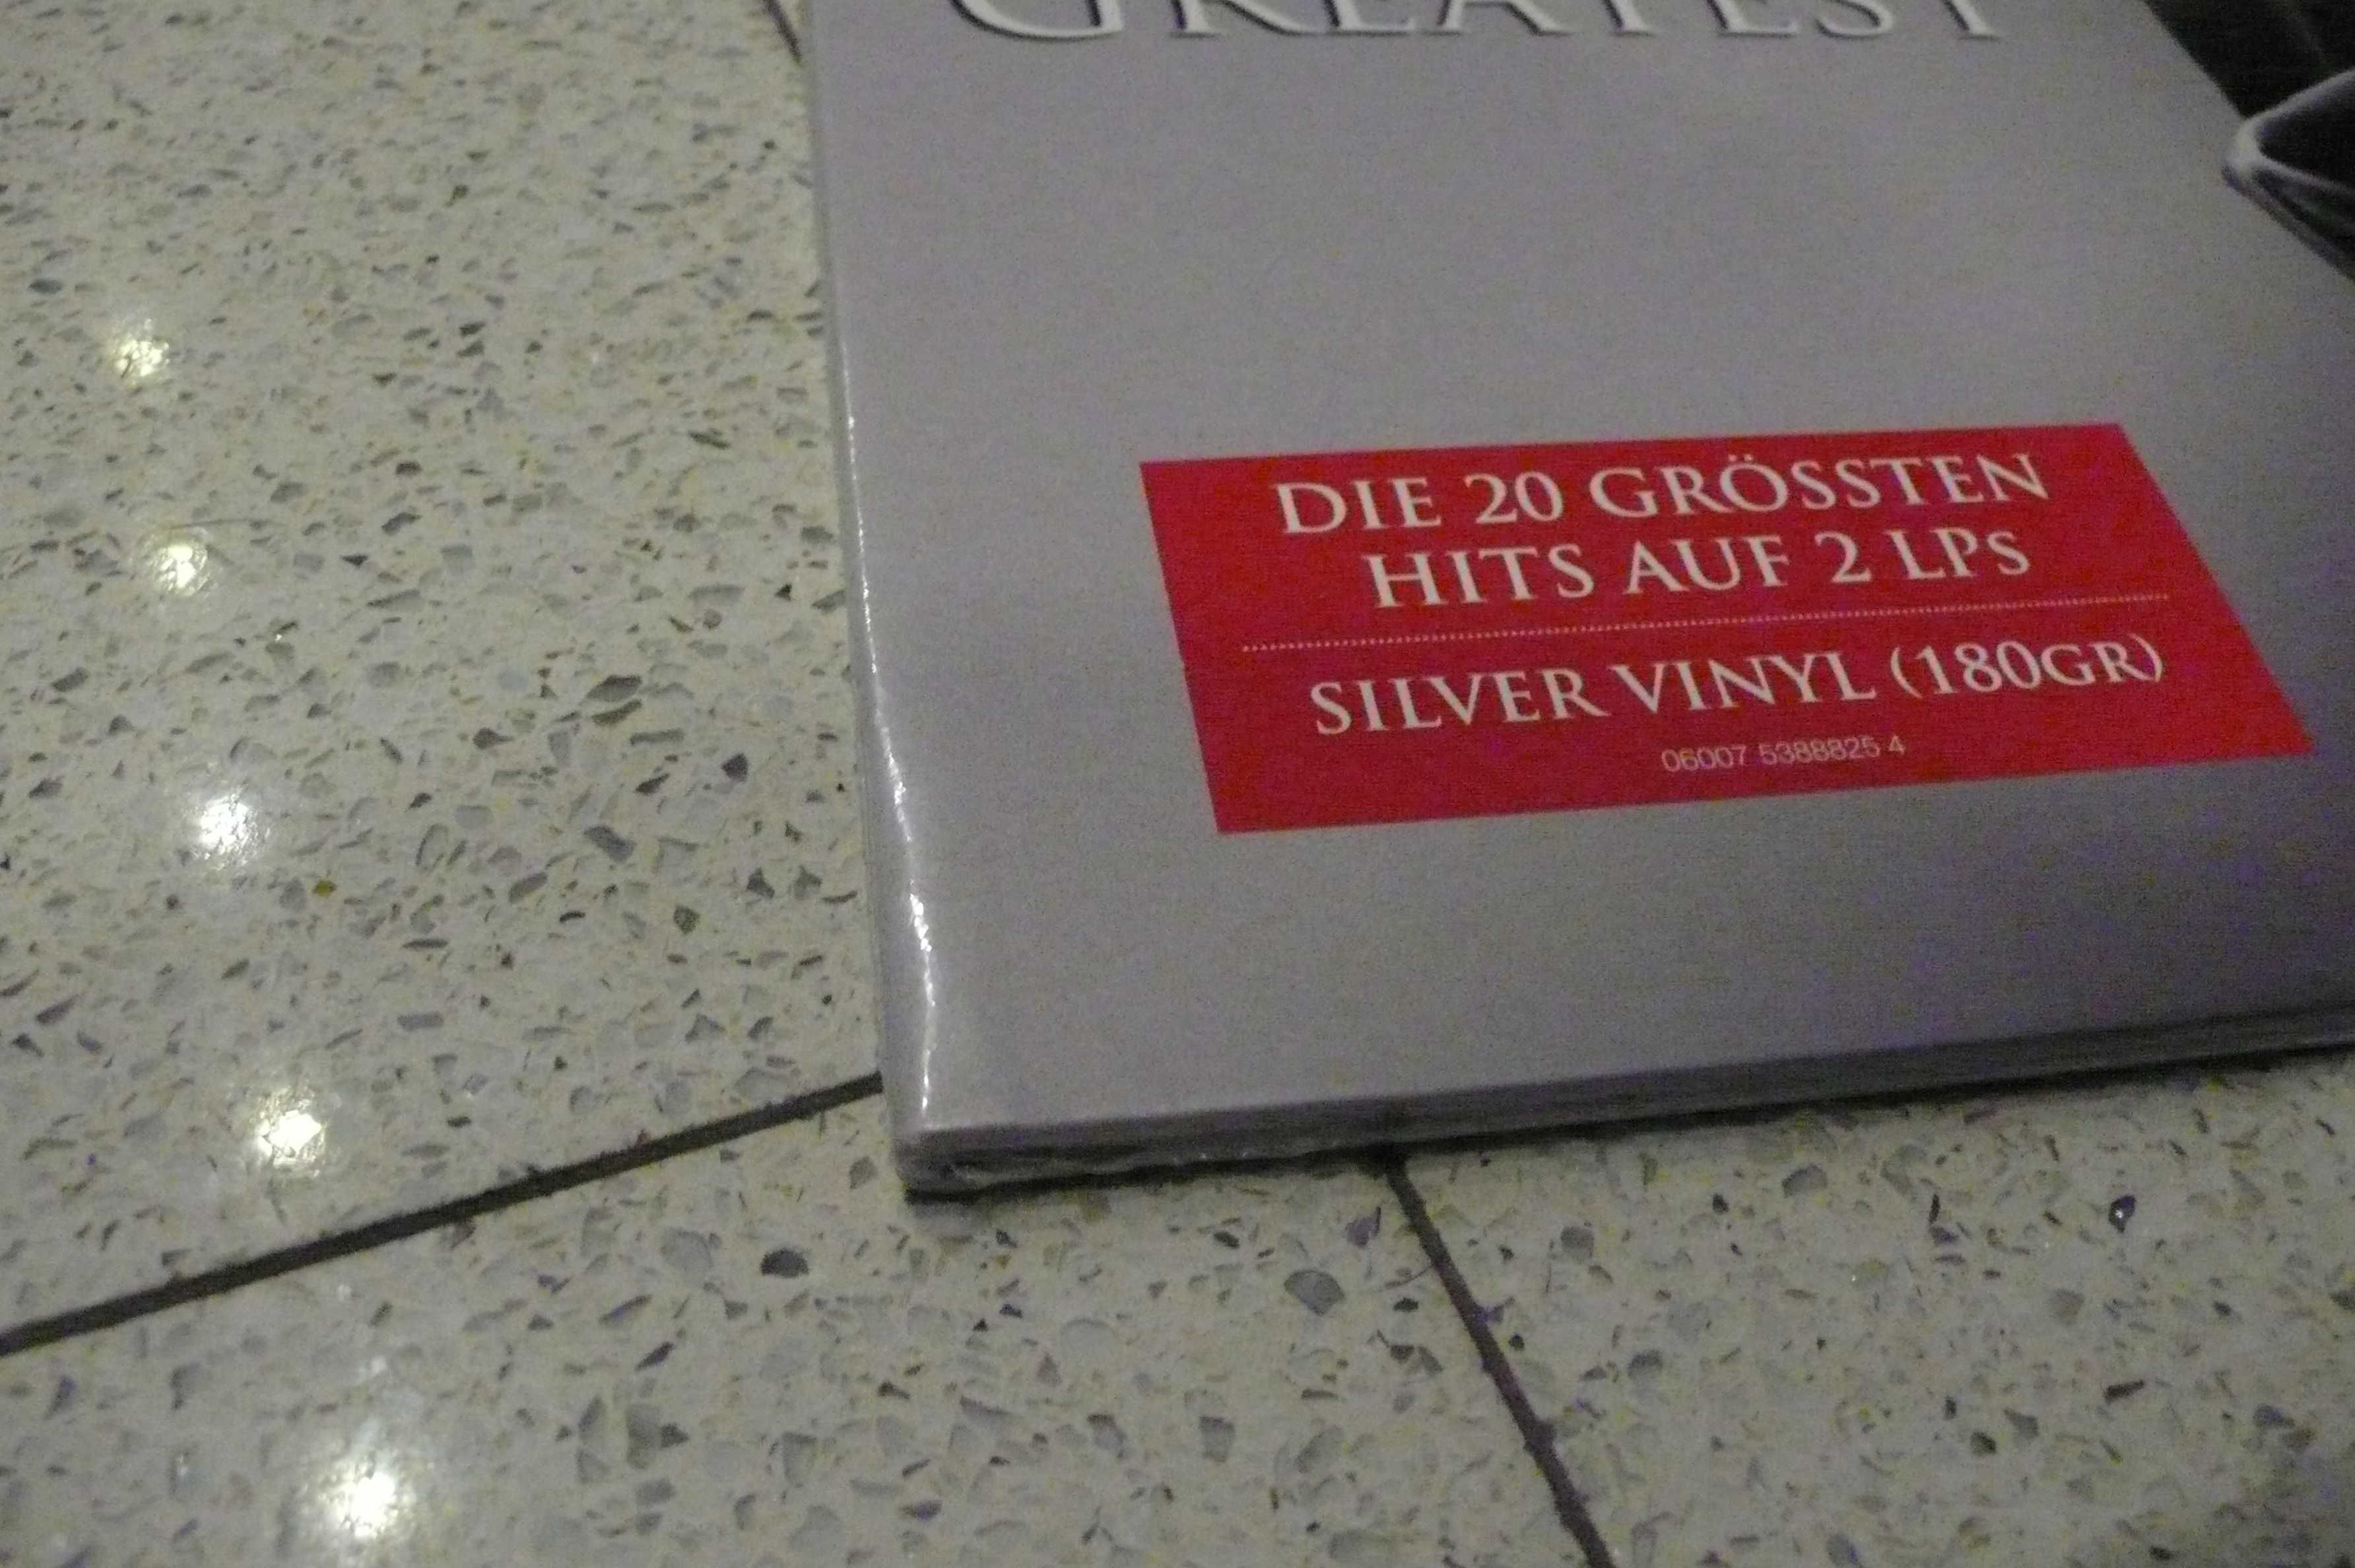 Queen : Absolute Greatest , 2x silver vinyl , nowa w folii